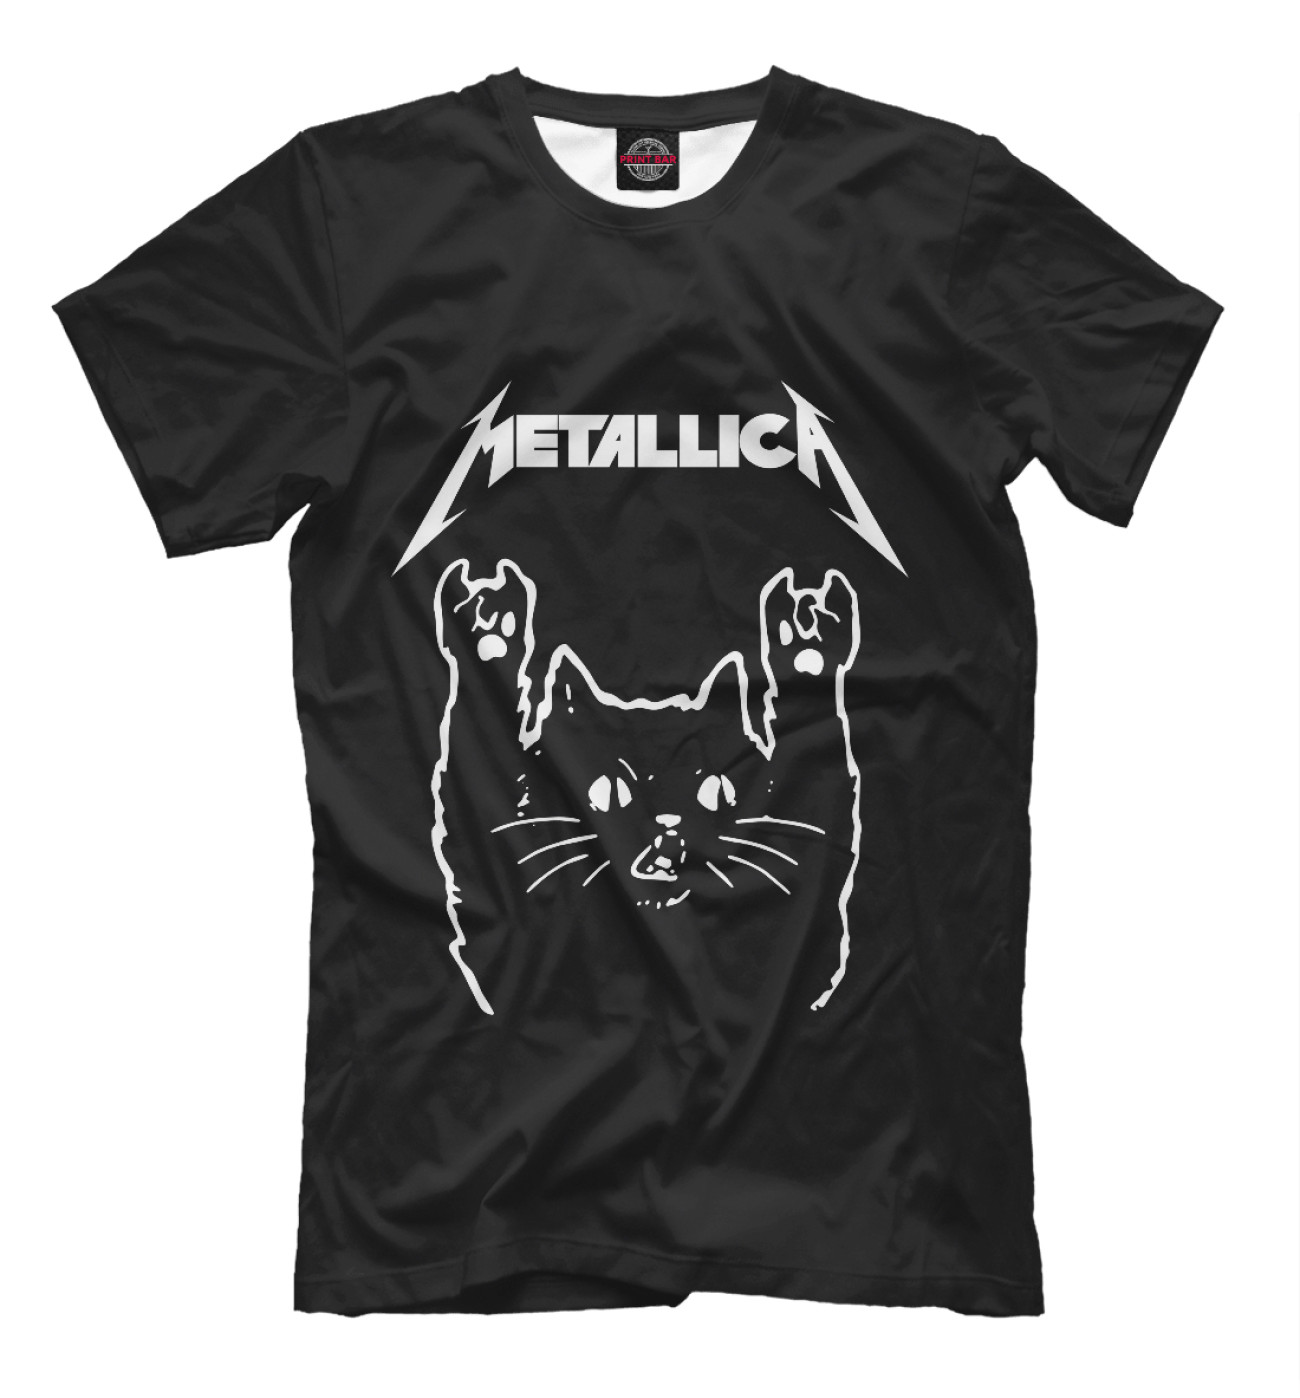 Мужская Футболка Metallica, артикул: MET-927908-fut-2